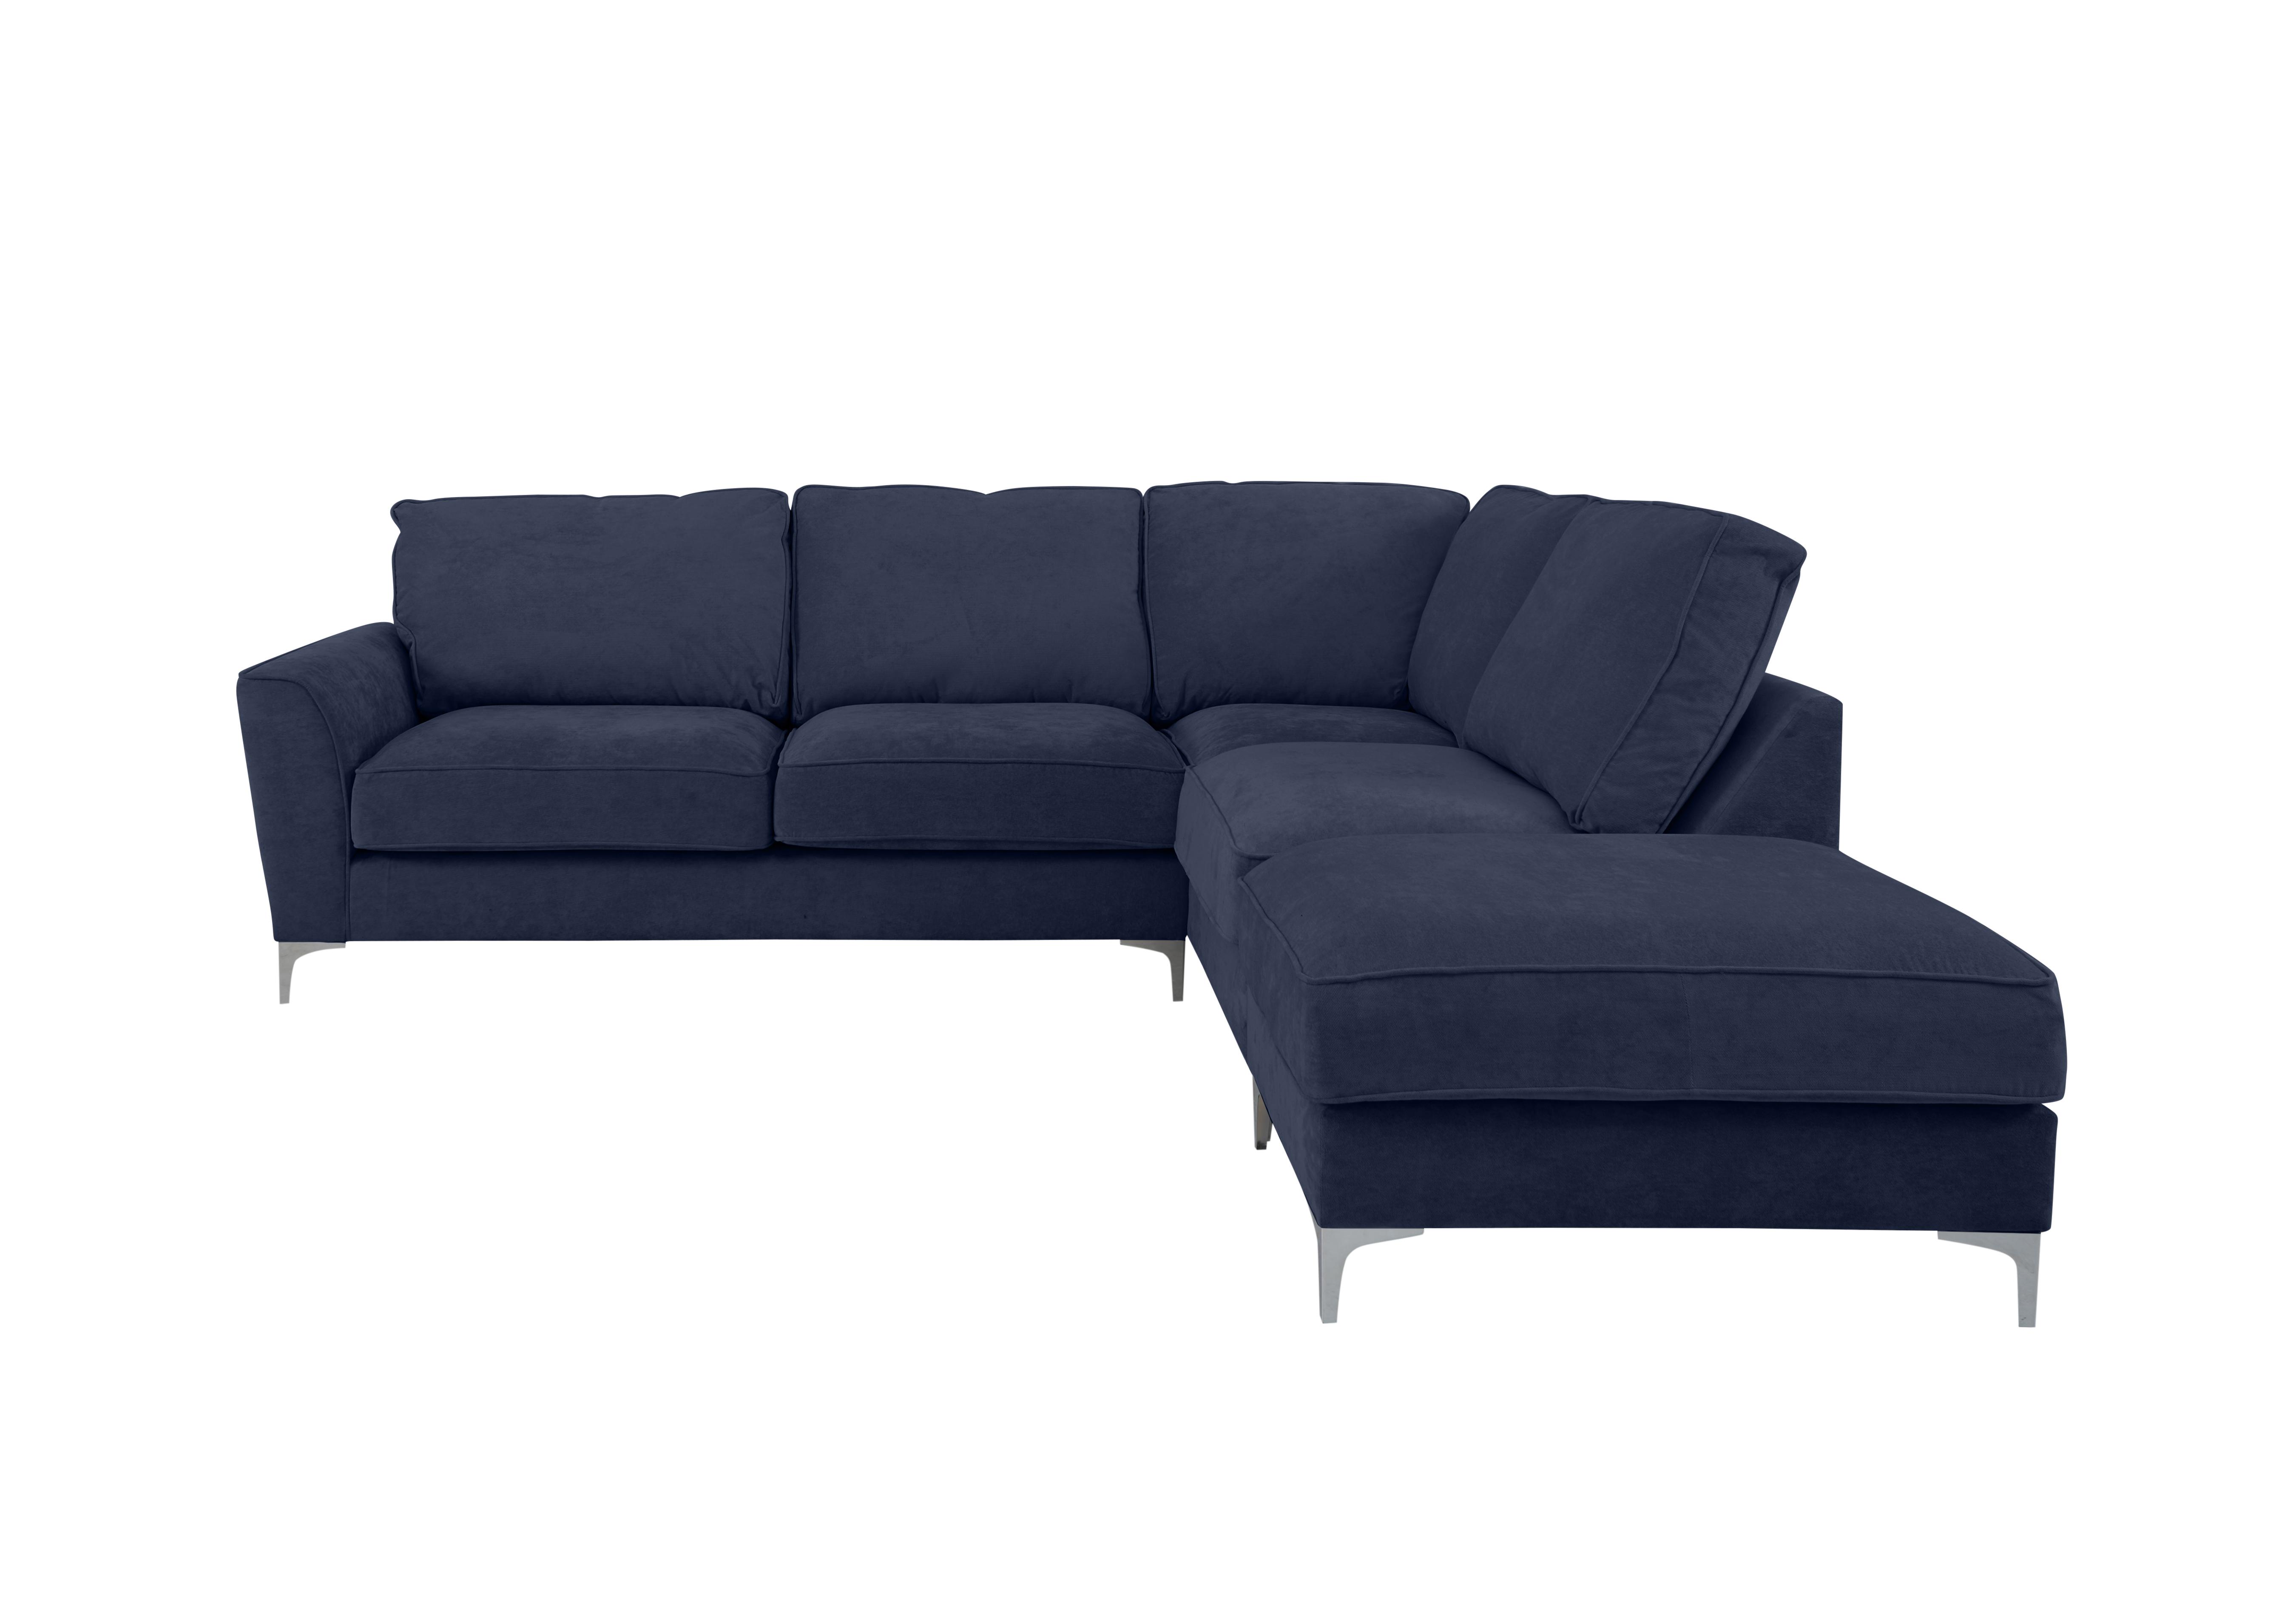 Legend Classic Back Fabric Corner Sofa in Cosmo Navy on Furniture Village